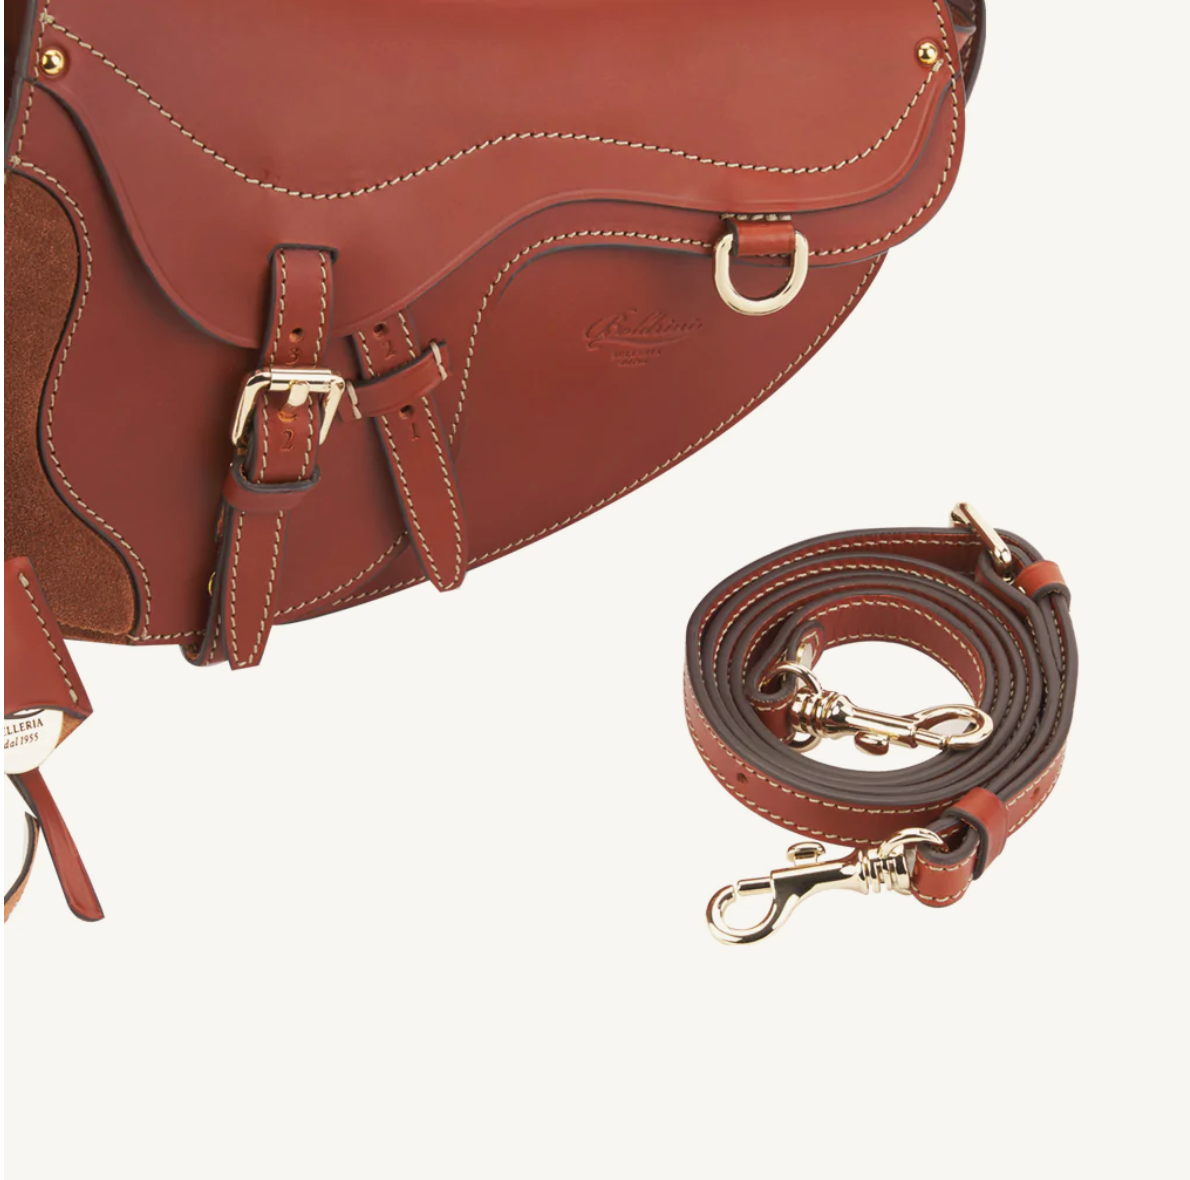 Handbag Made In Italy by Boldrini Selleria